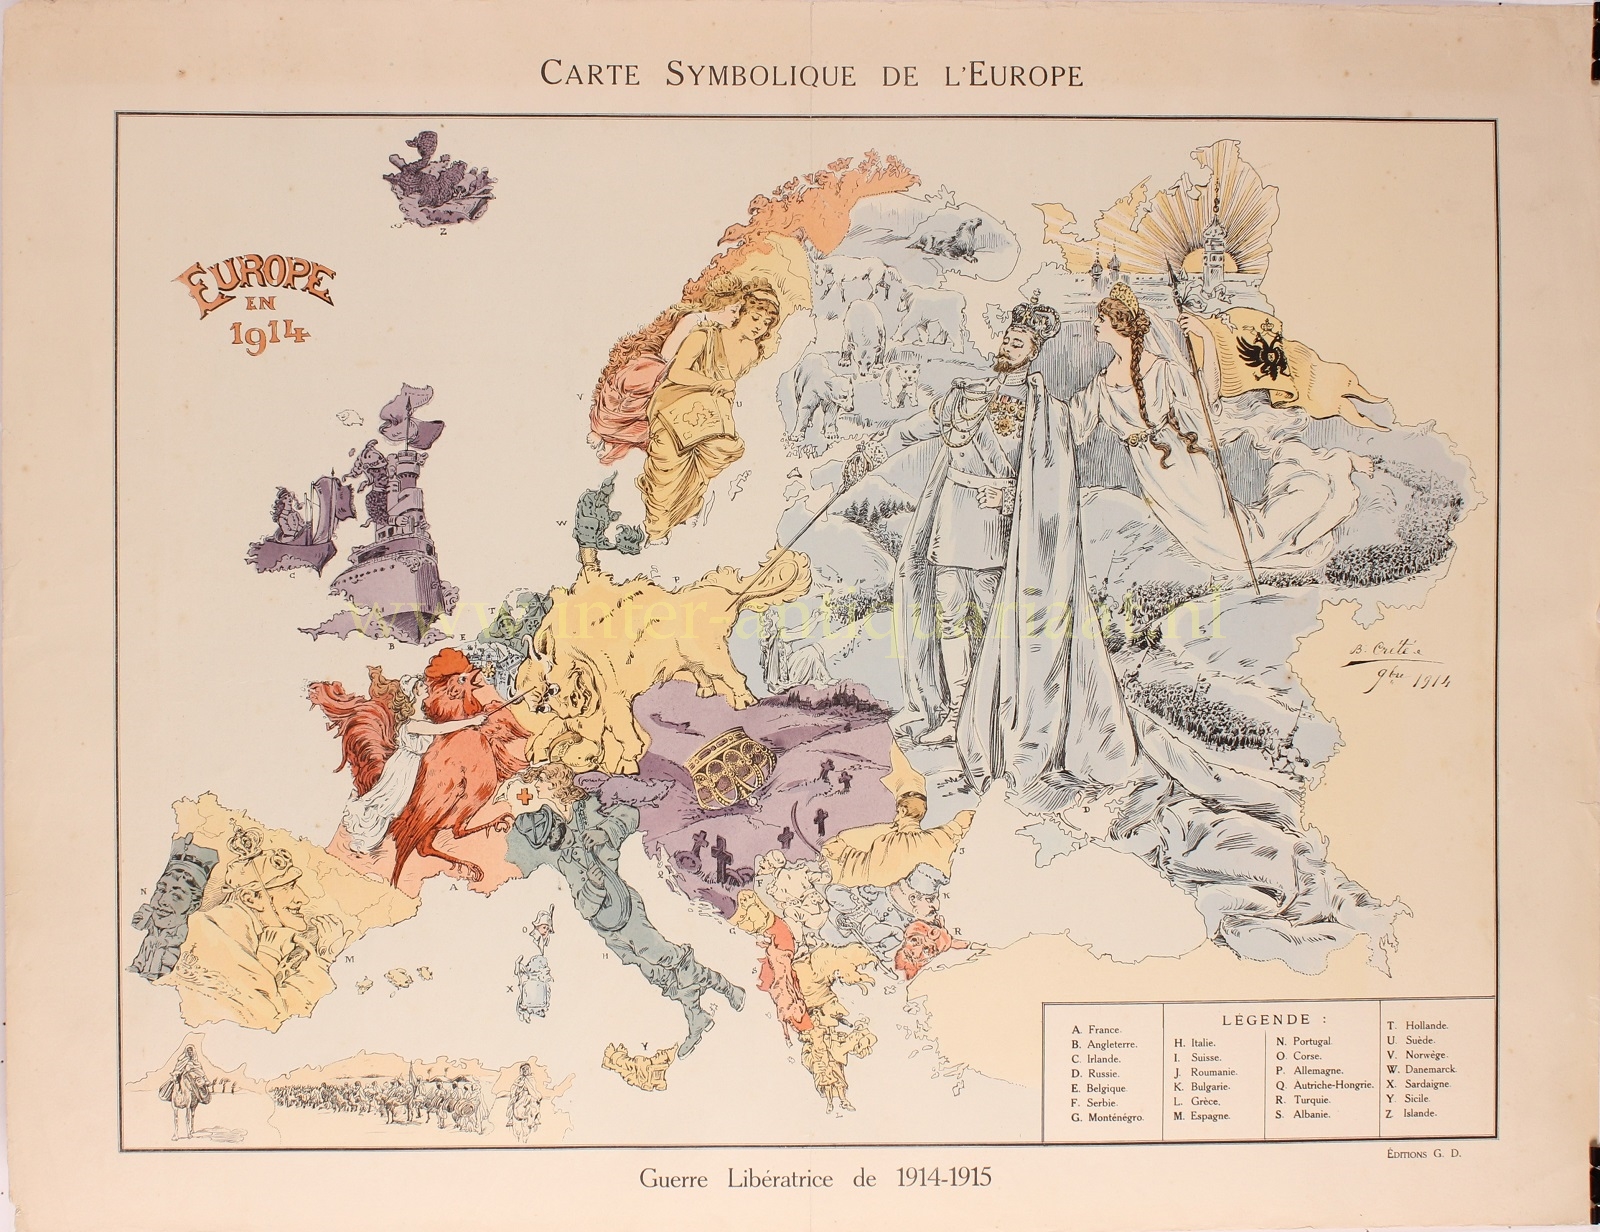  - Europe cartoon map - B. Crt, 1914/15